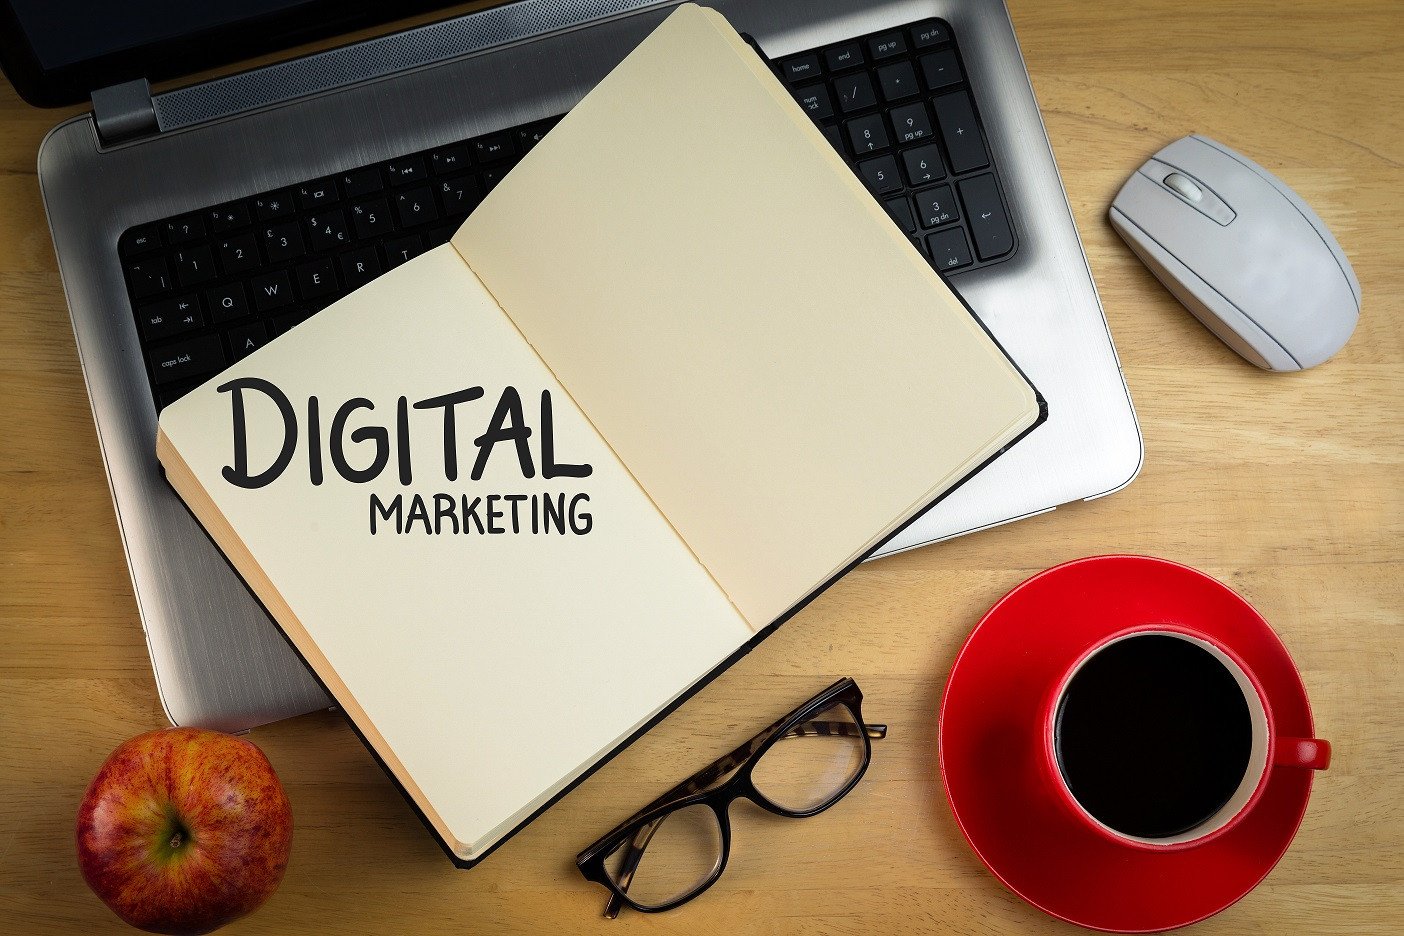 Embracing the Digital Revolution: Starting Digital for Your Business